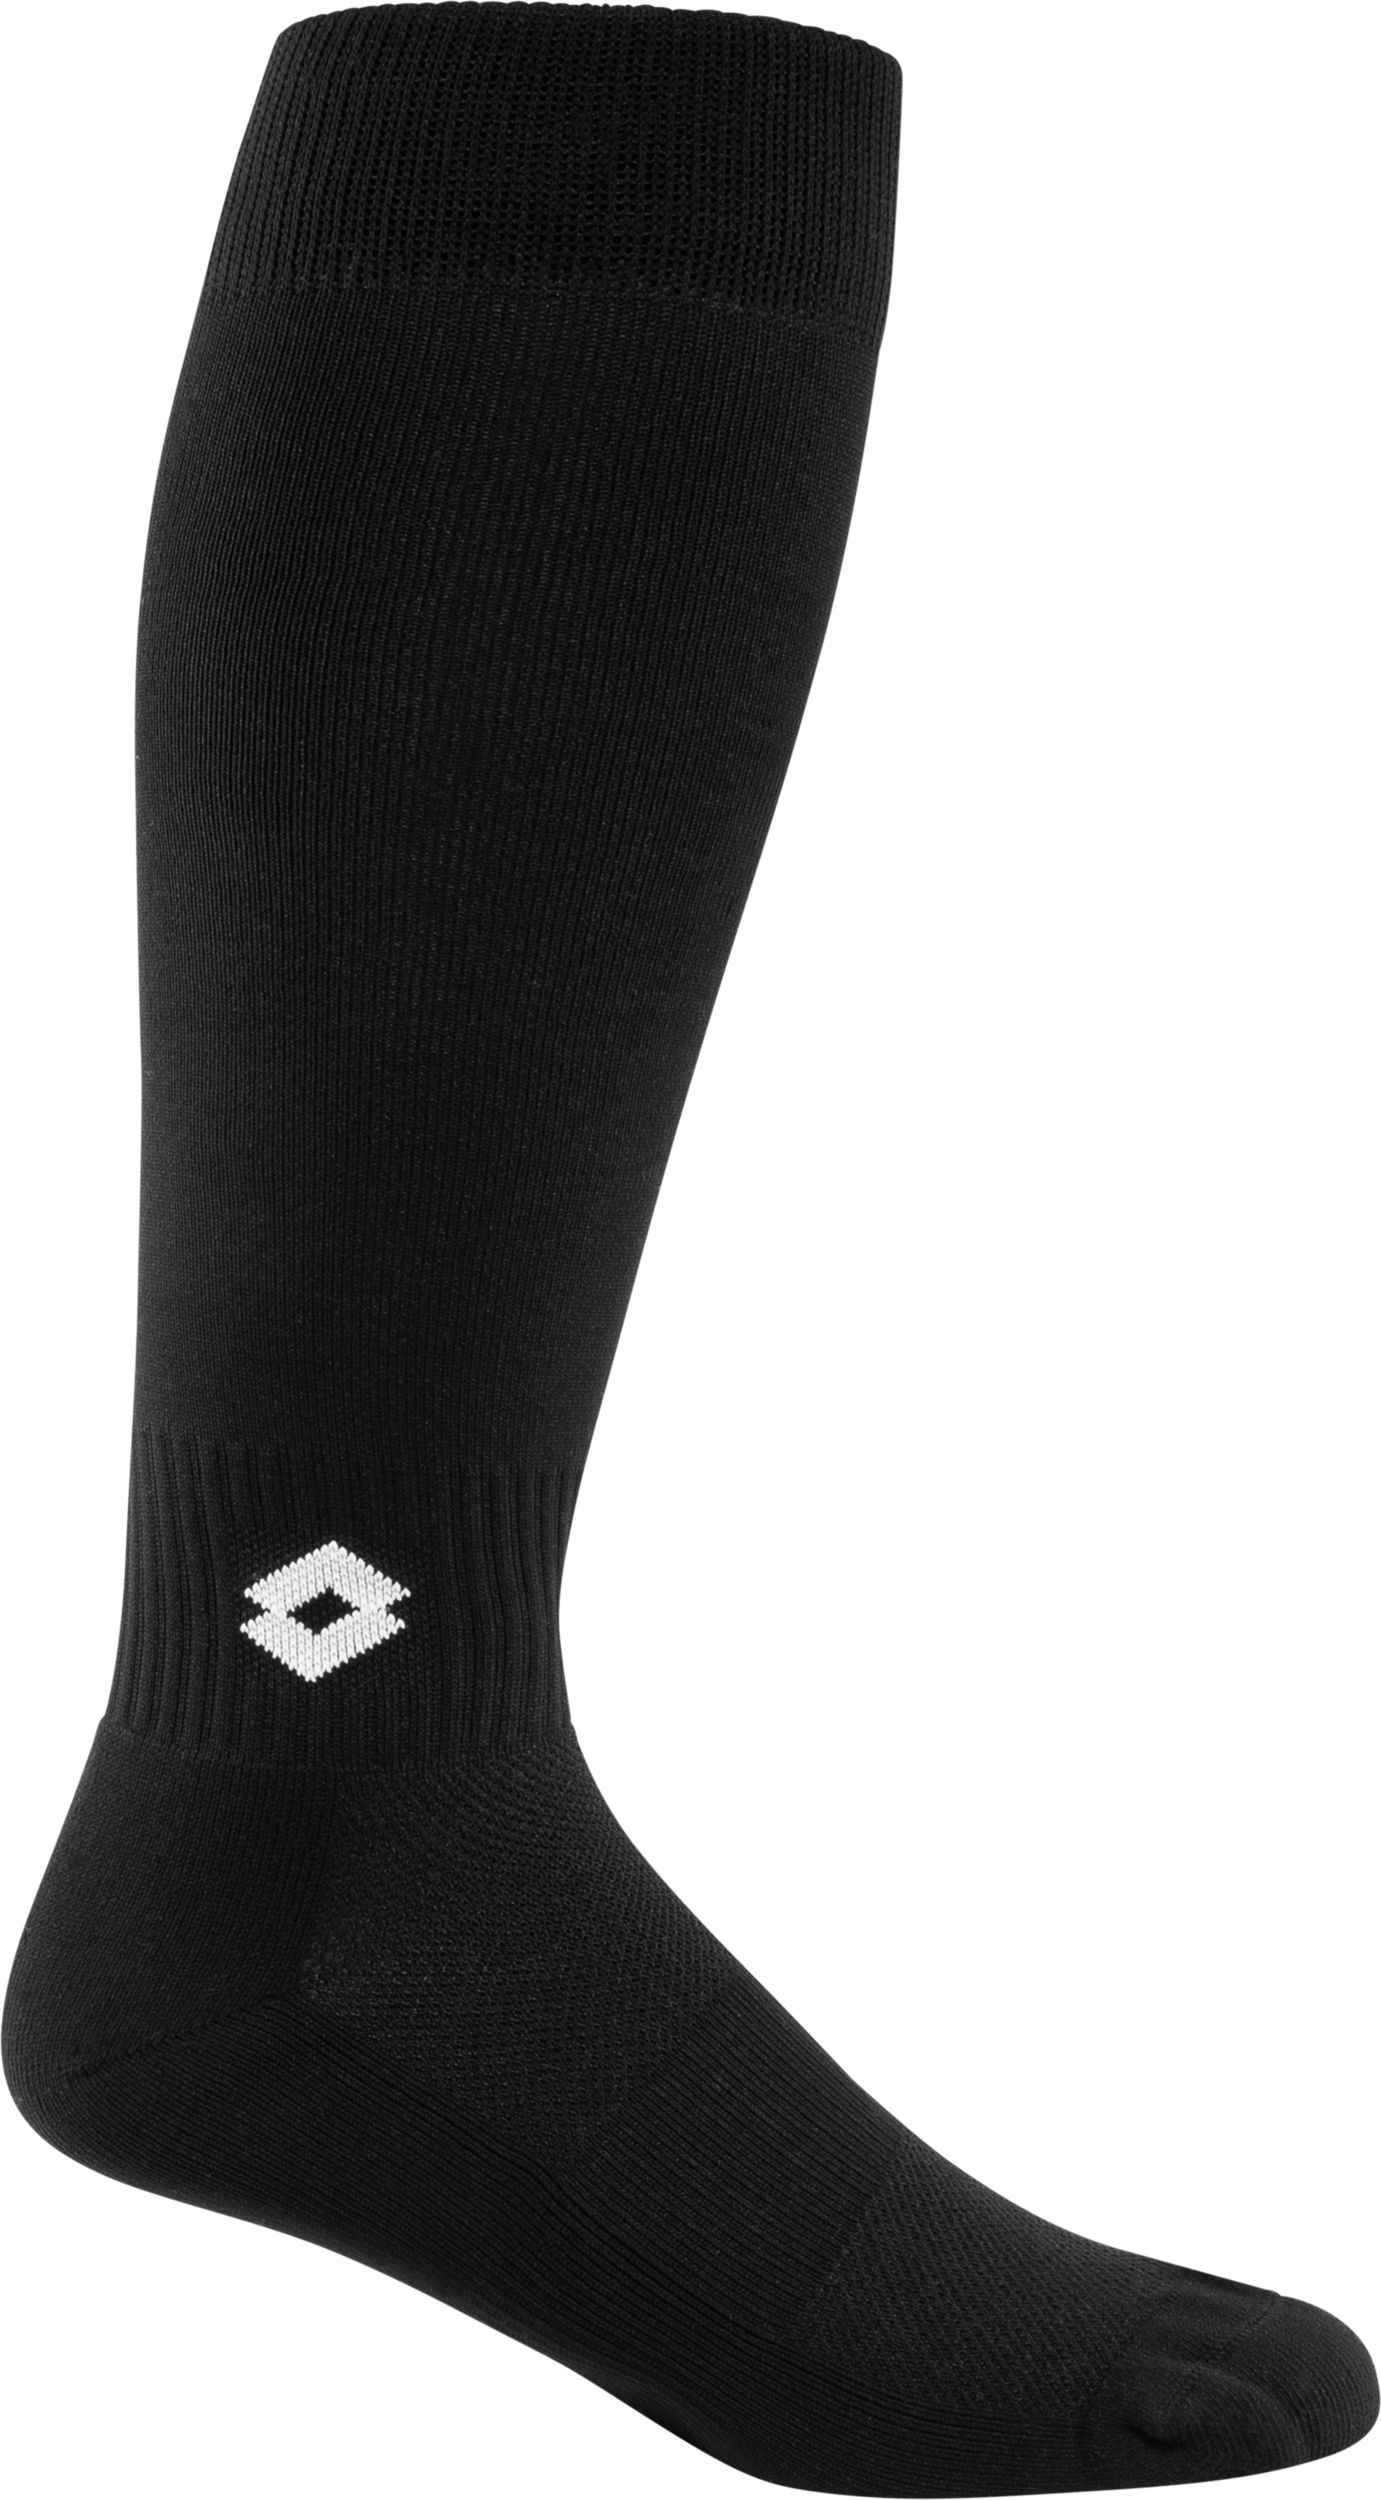 Image of Lotto Soccer Socks